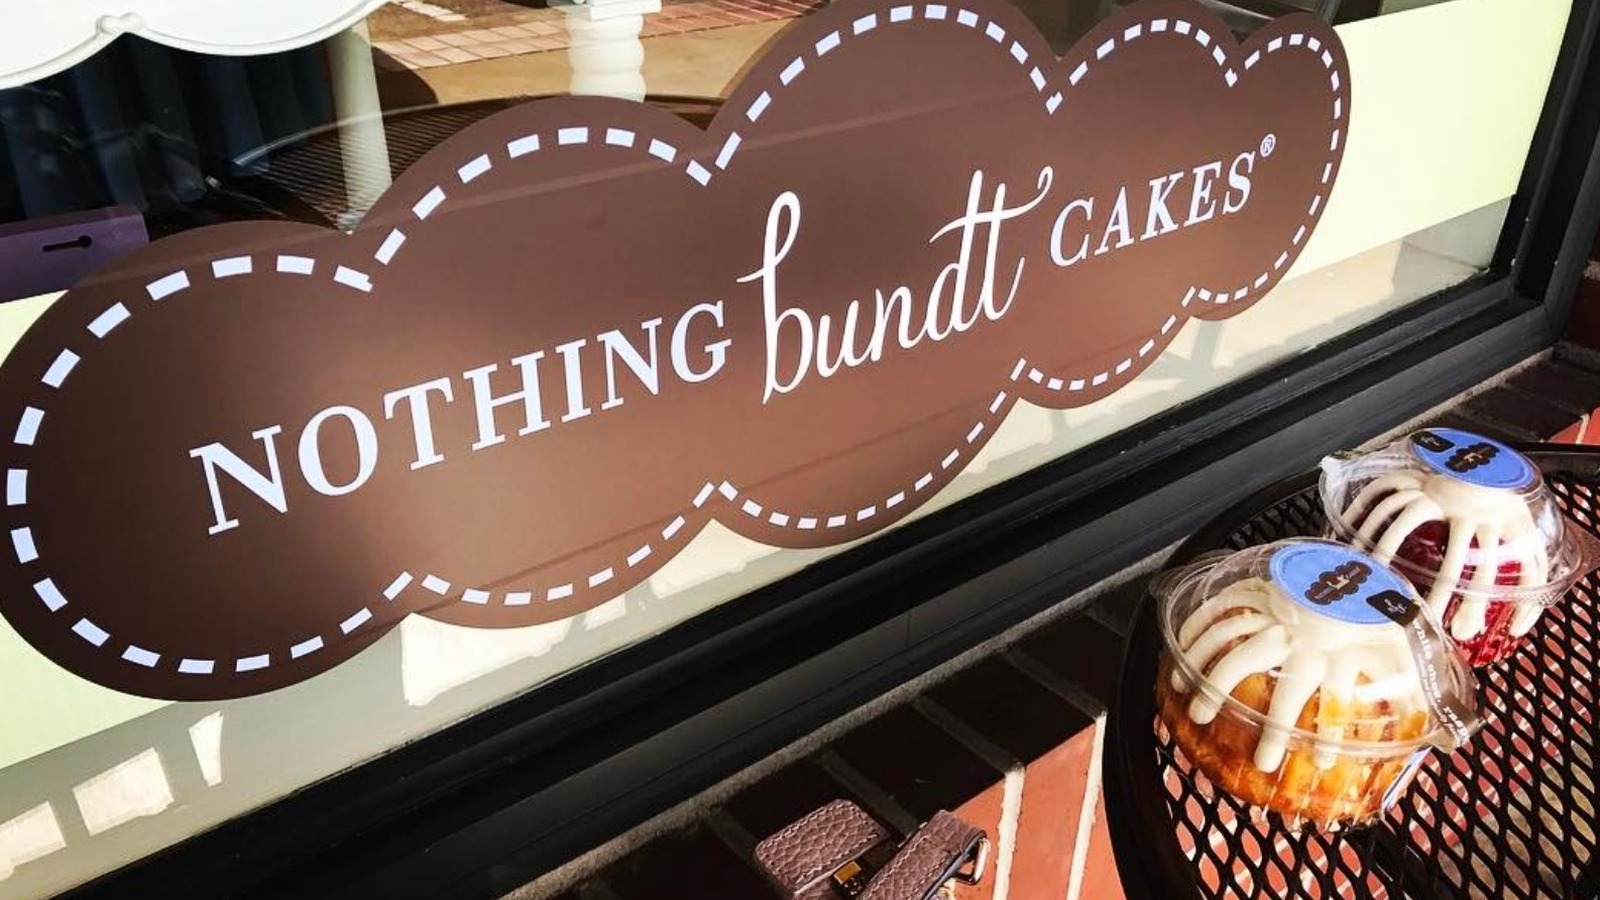 Wedding Cake Bakeries in Savannah, GA - The Knot